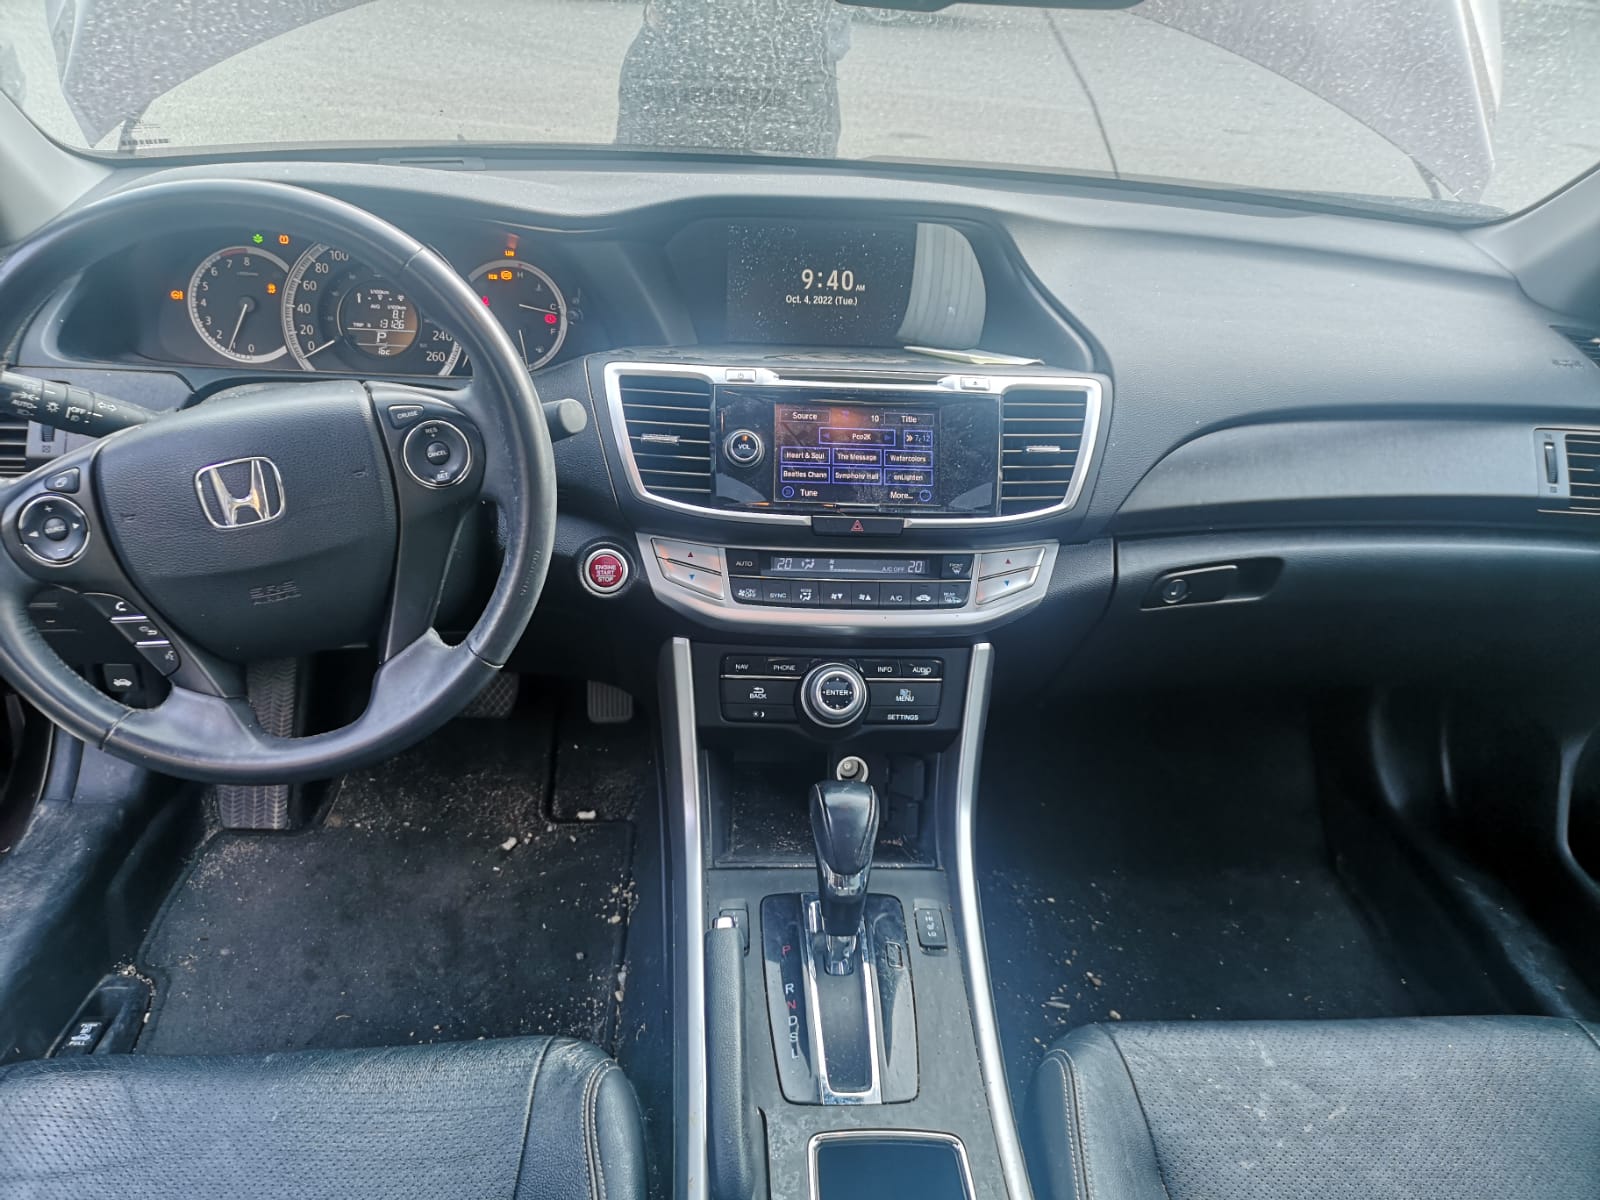 2015 Honda Accord #B-KAM-0307 Located in Kelowna